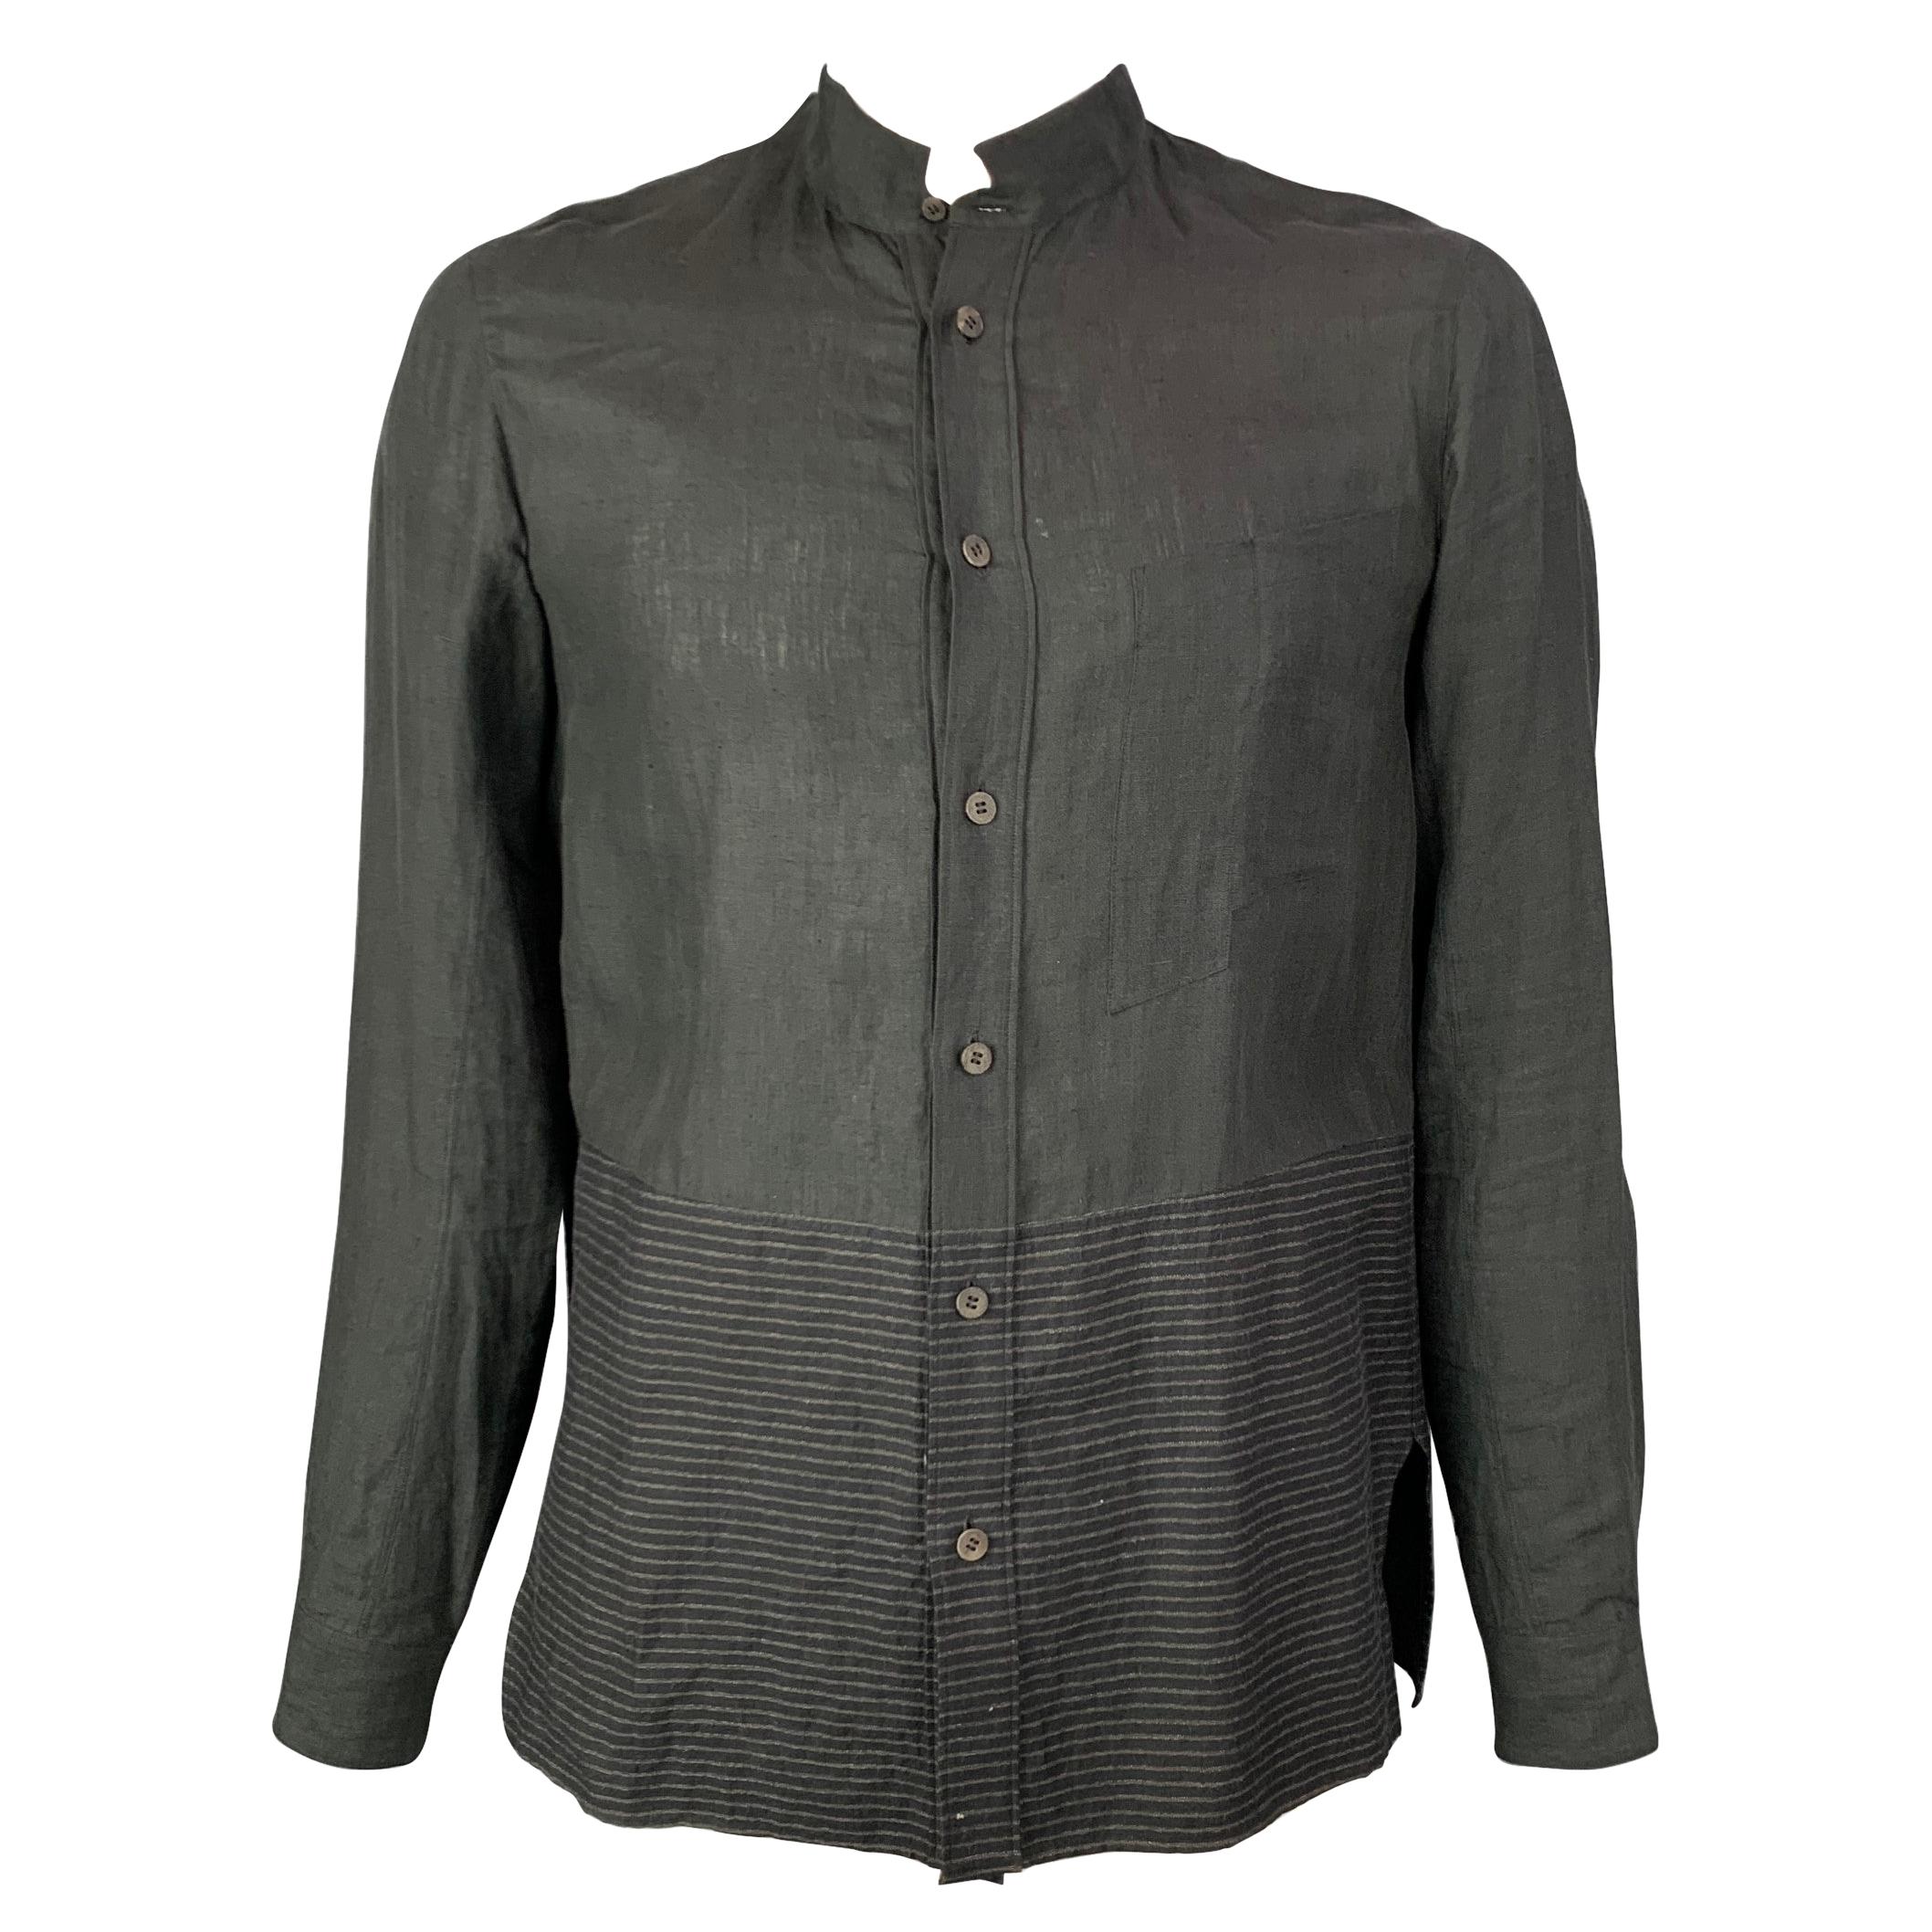 ZIGGY CHEN S/S 15 Size L Slate Mixed Fabrics Cotton / Linen Long Sleeve Shirt